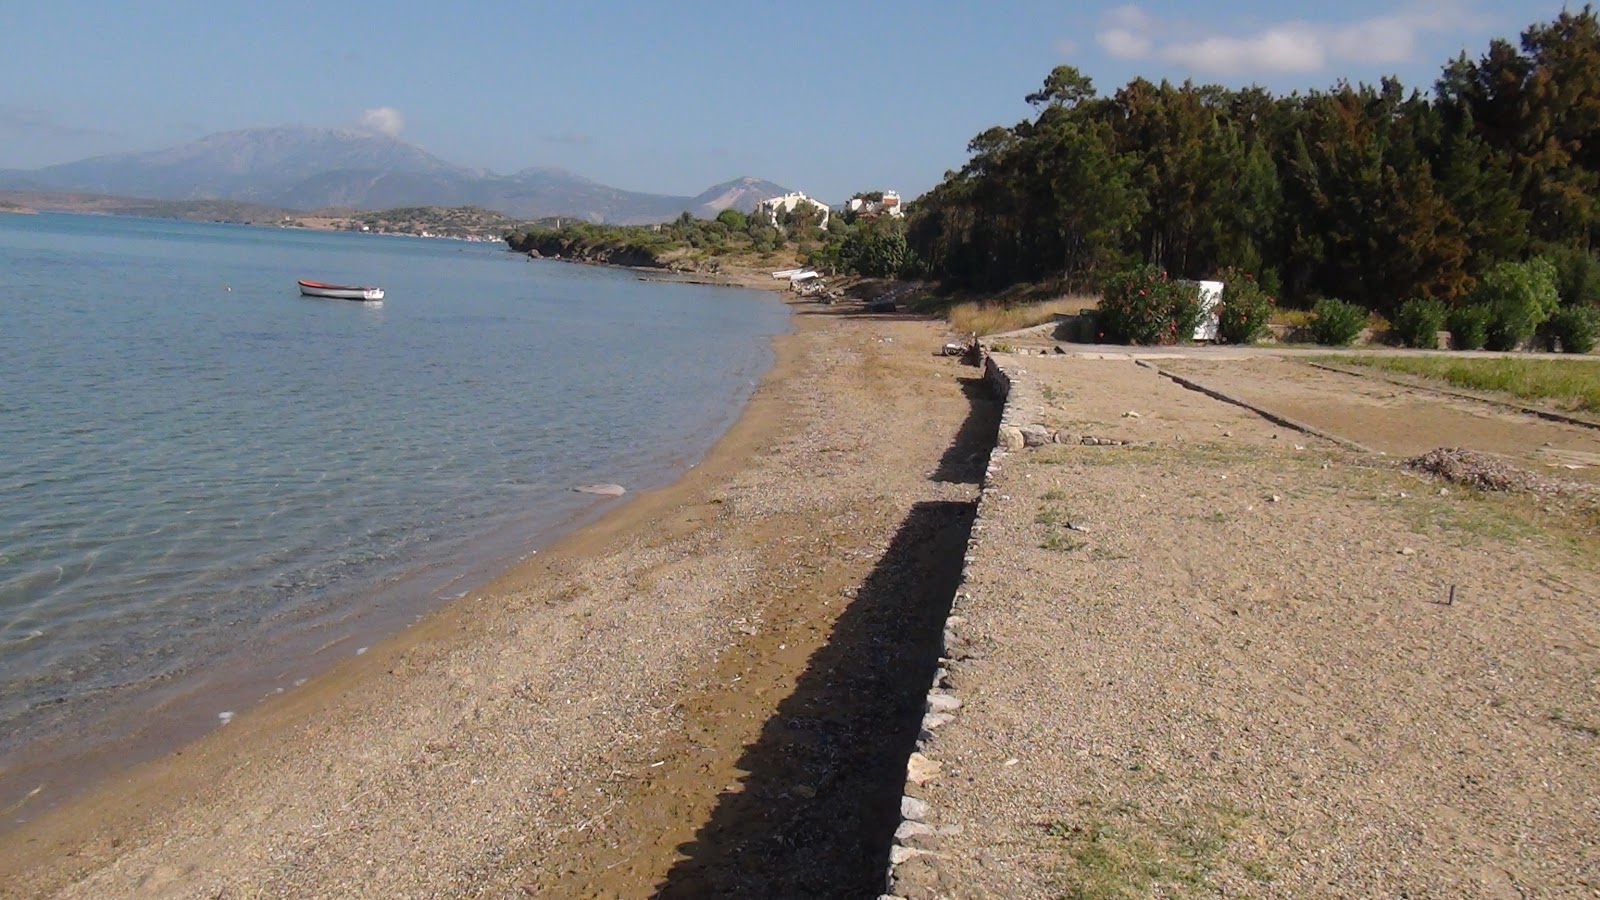 Foto av Istur beach med brunsand yta